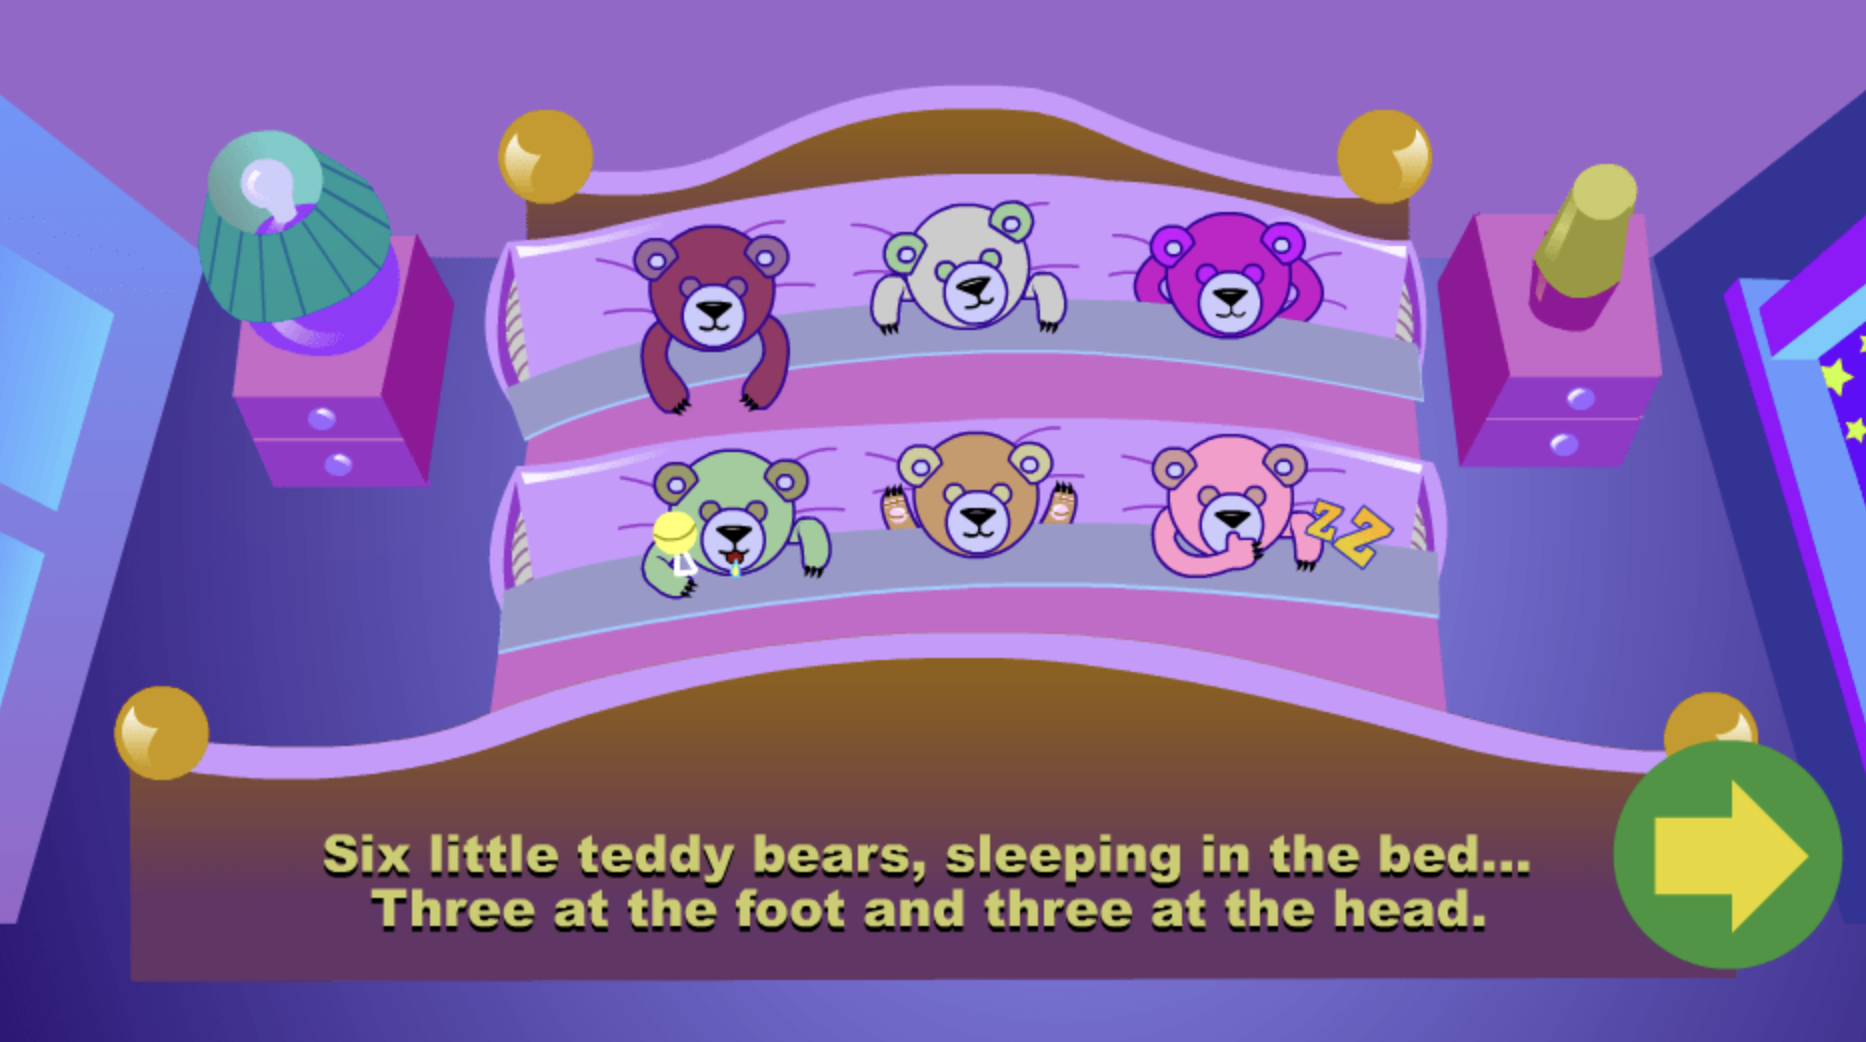 Story about teddy bears sleeping